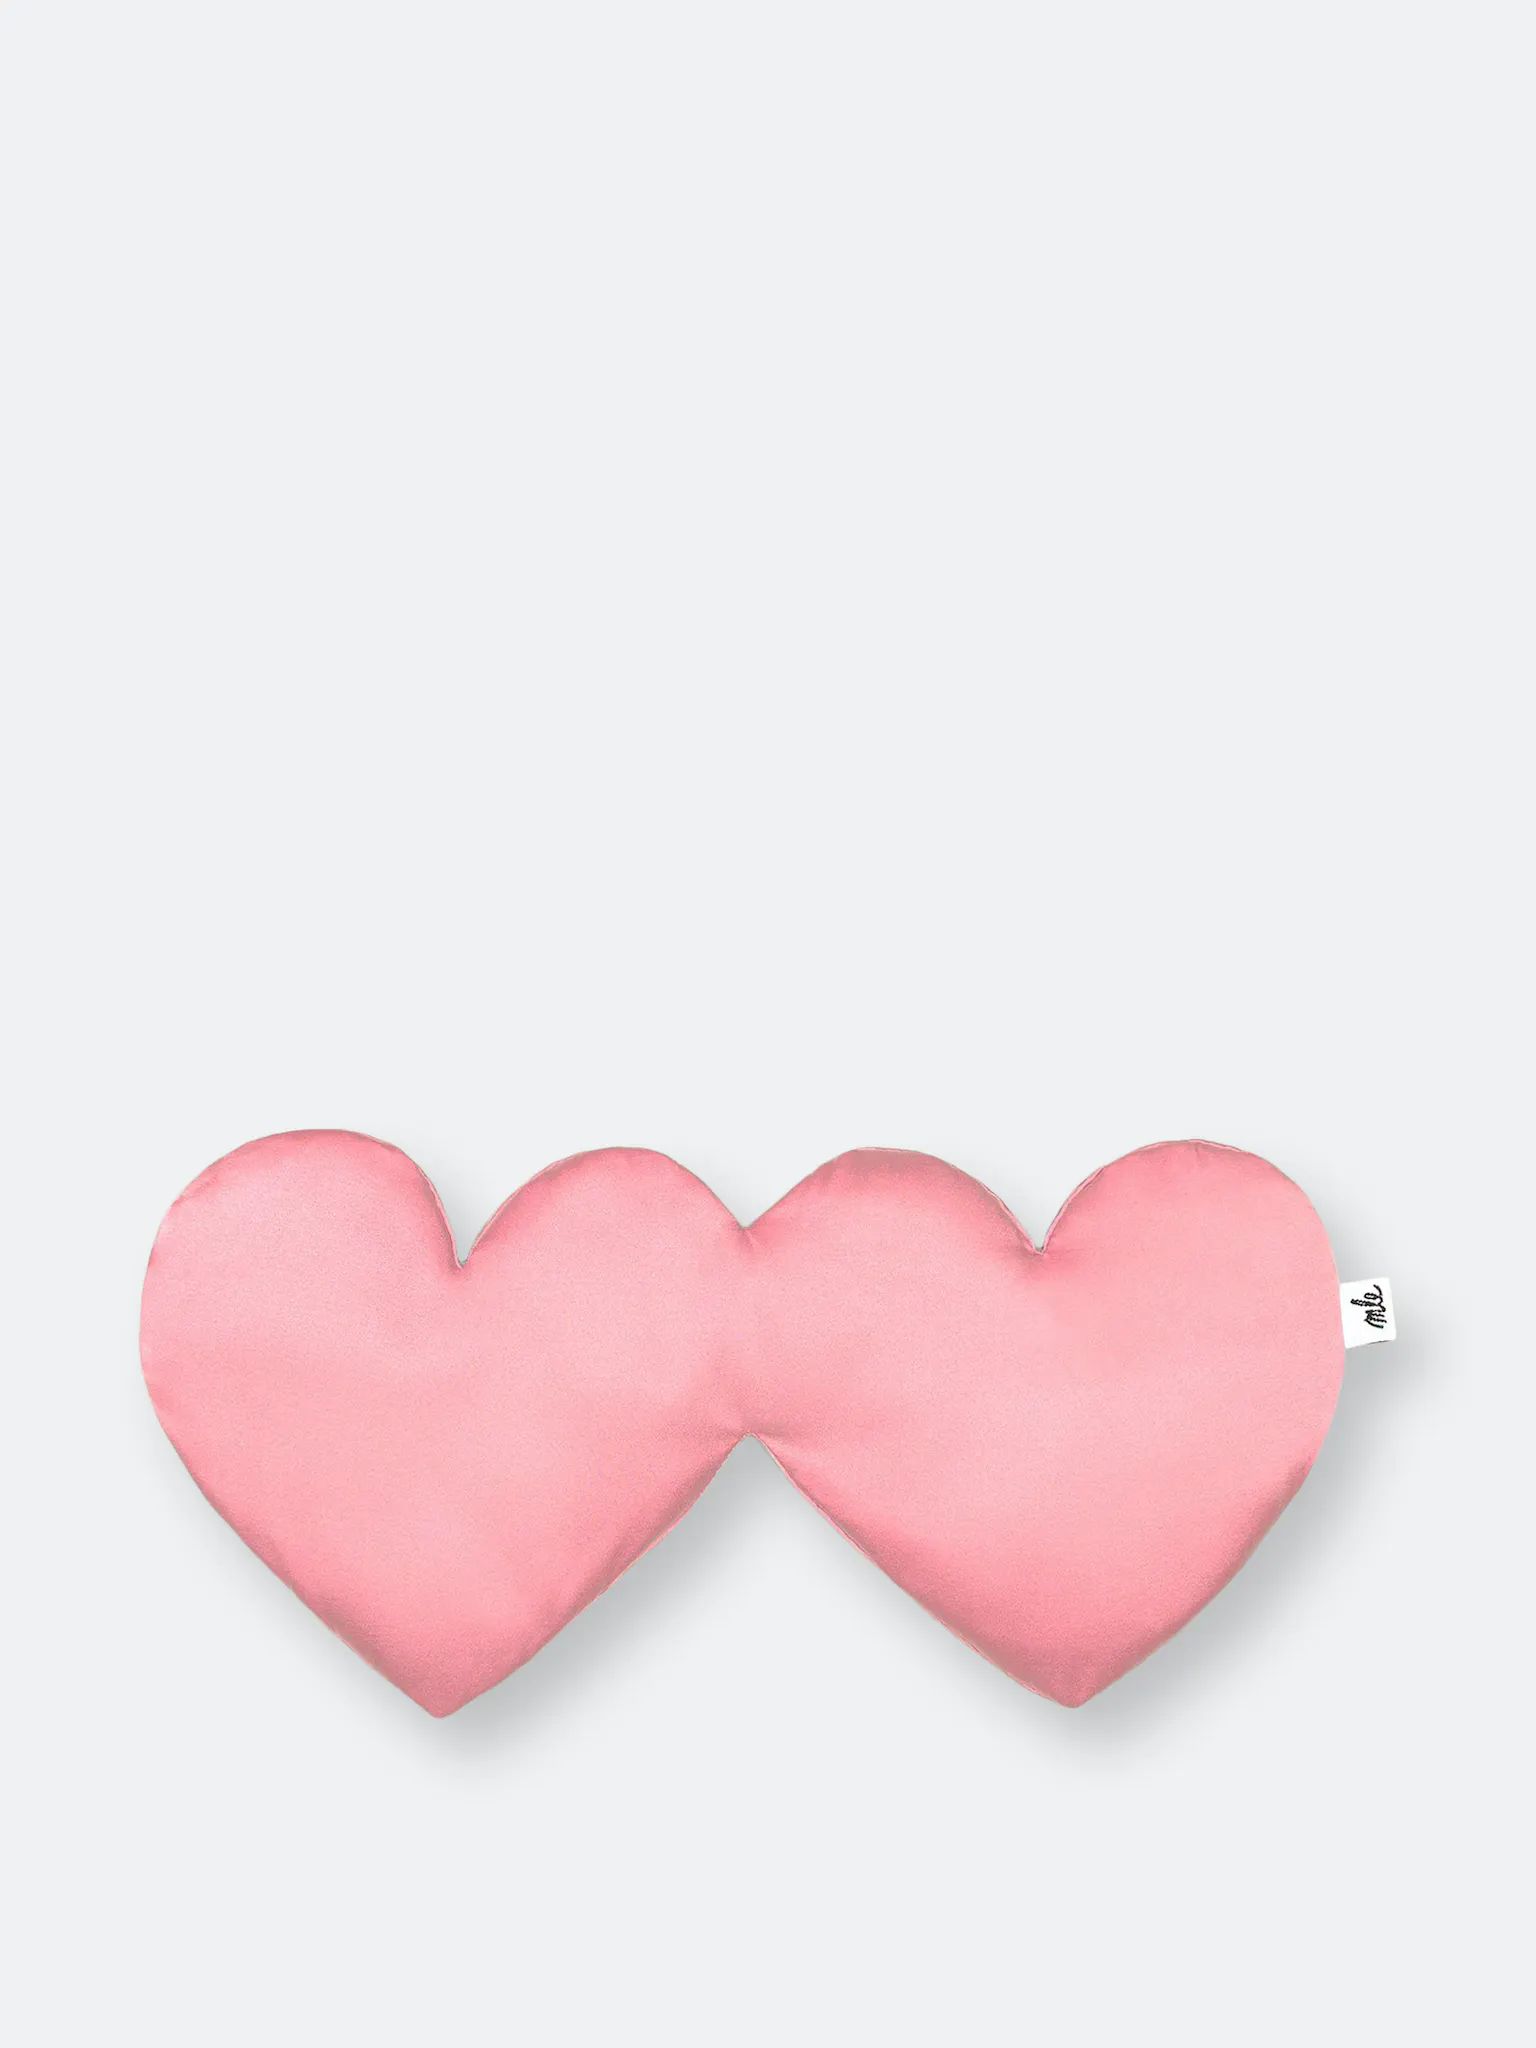 MLE Heart Sleep Mask in Pink | Verishop